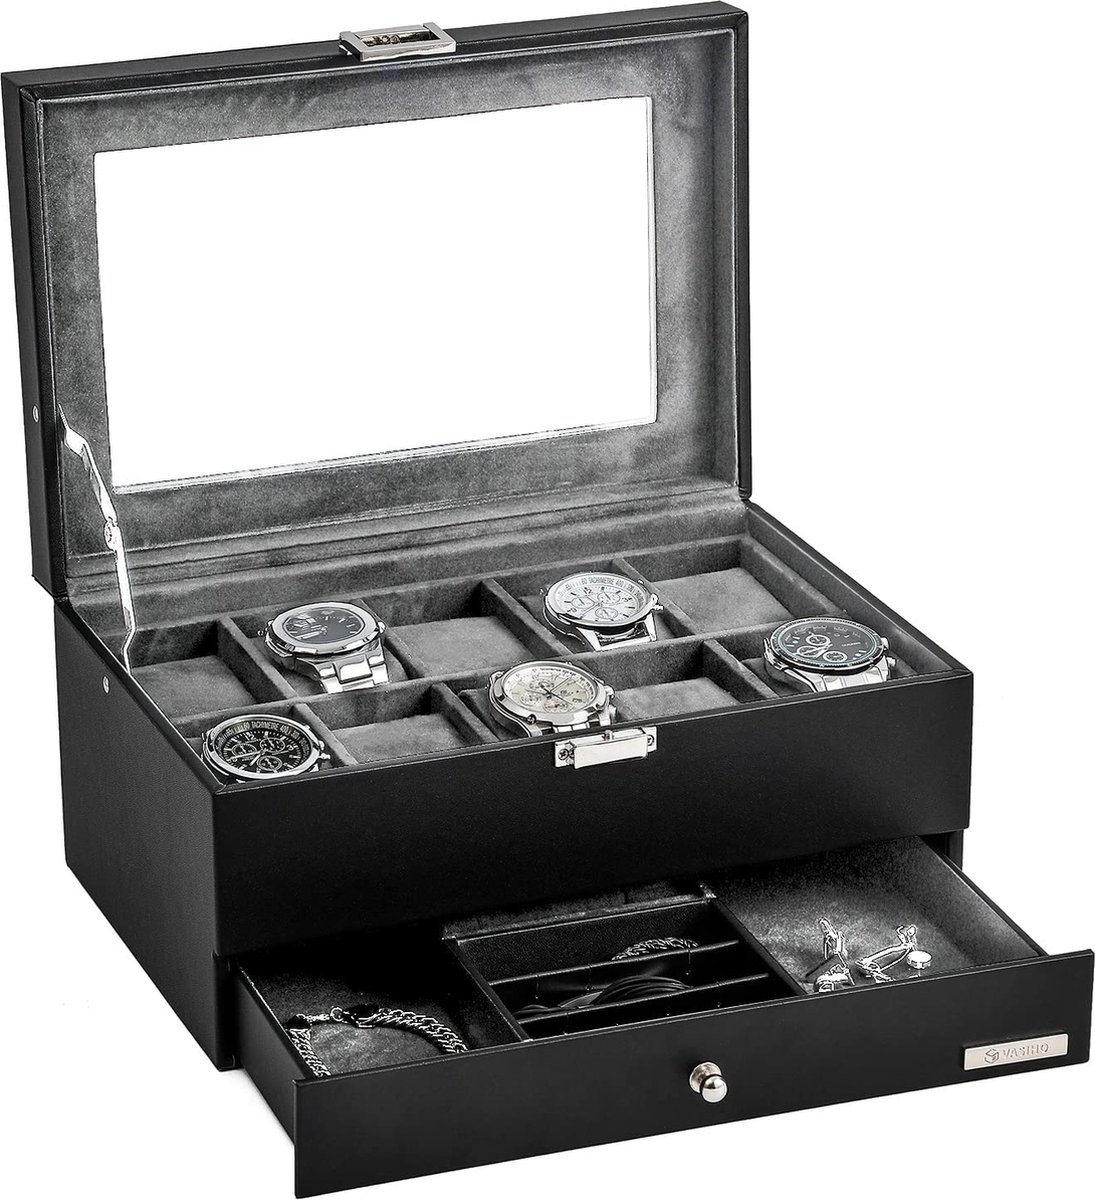 VASIHO herenhorlogebox met 10 vakken, horlogekast met afneembaar horlogekussen en glazen deksel, sieradenvitrine met uitneembaar dienblad voor opslag en presentatie, grijs SSH003H